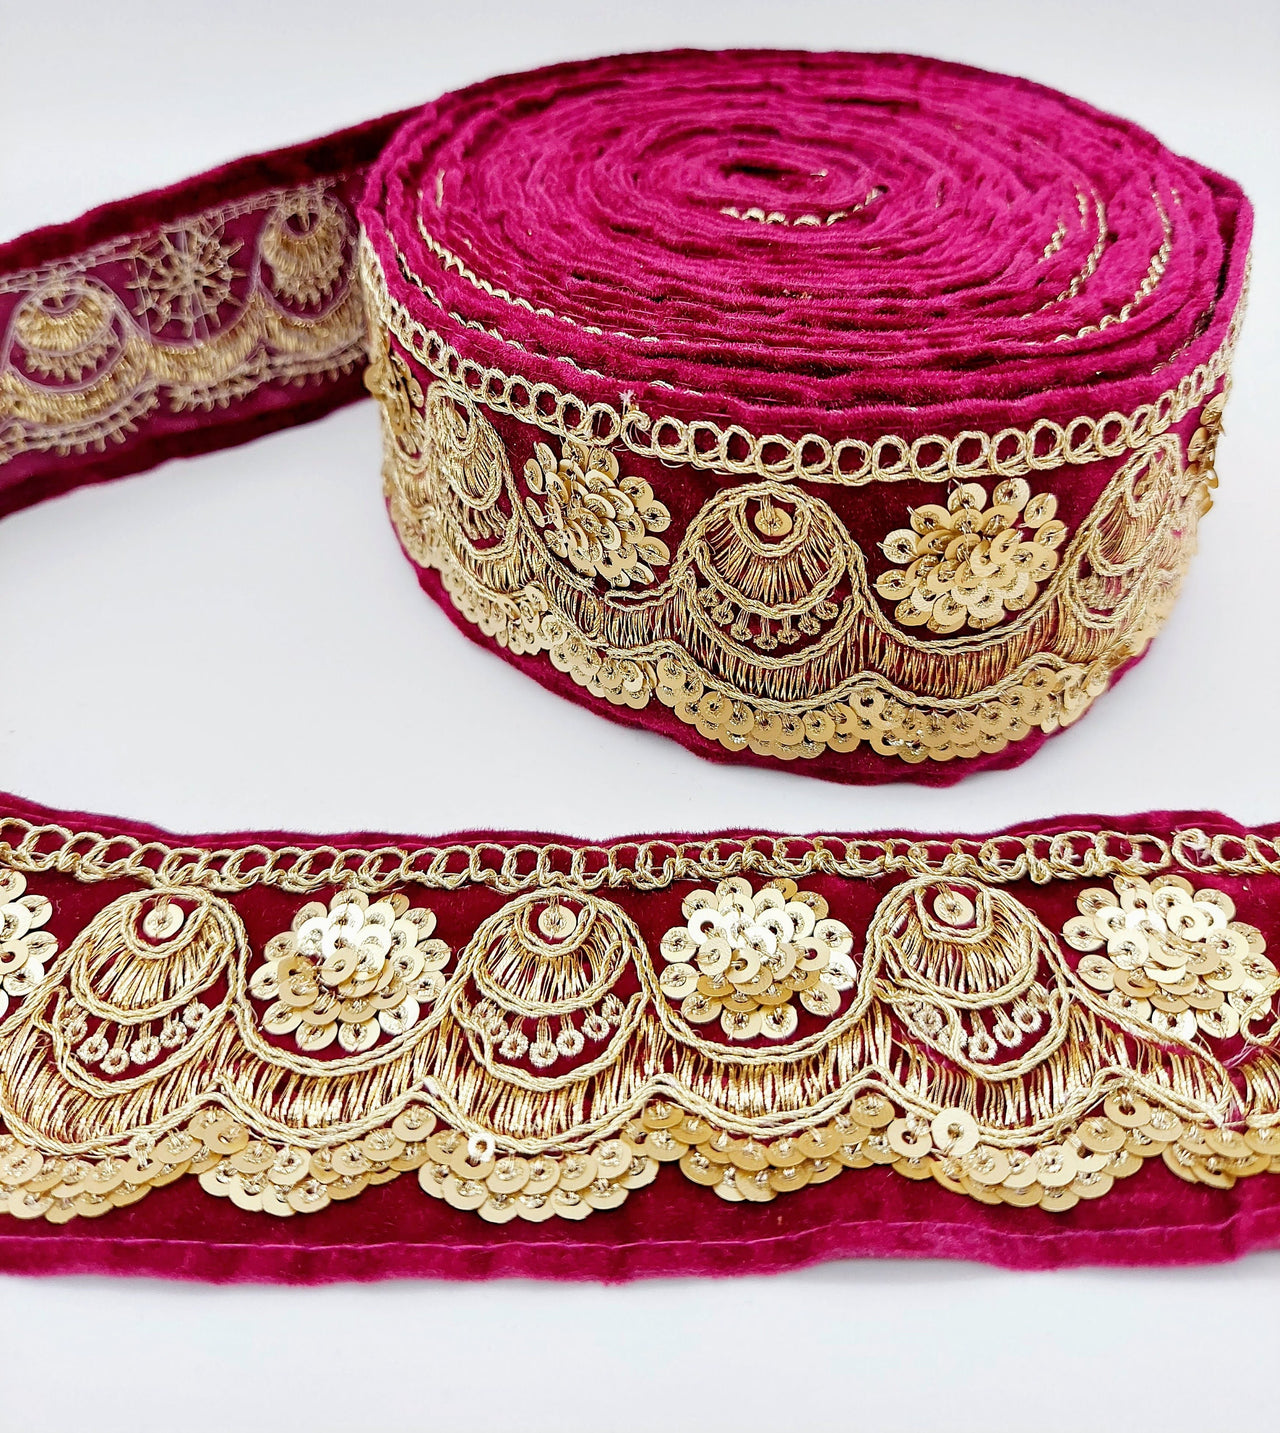 9 Yards Embroidered Velvet Fabric Trim Sequins Lace Sewing Trimming Sari Trim Indian Border